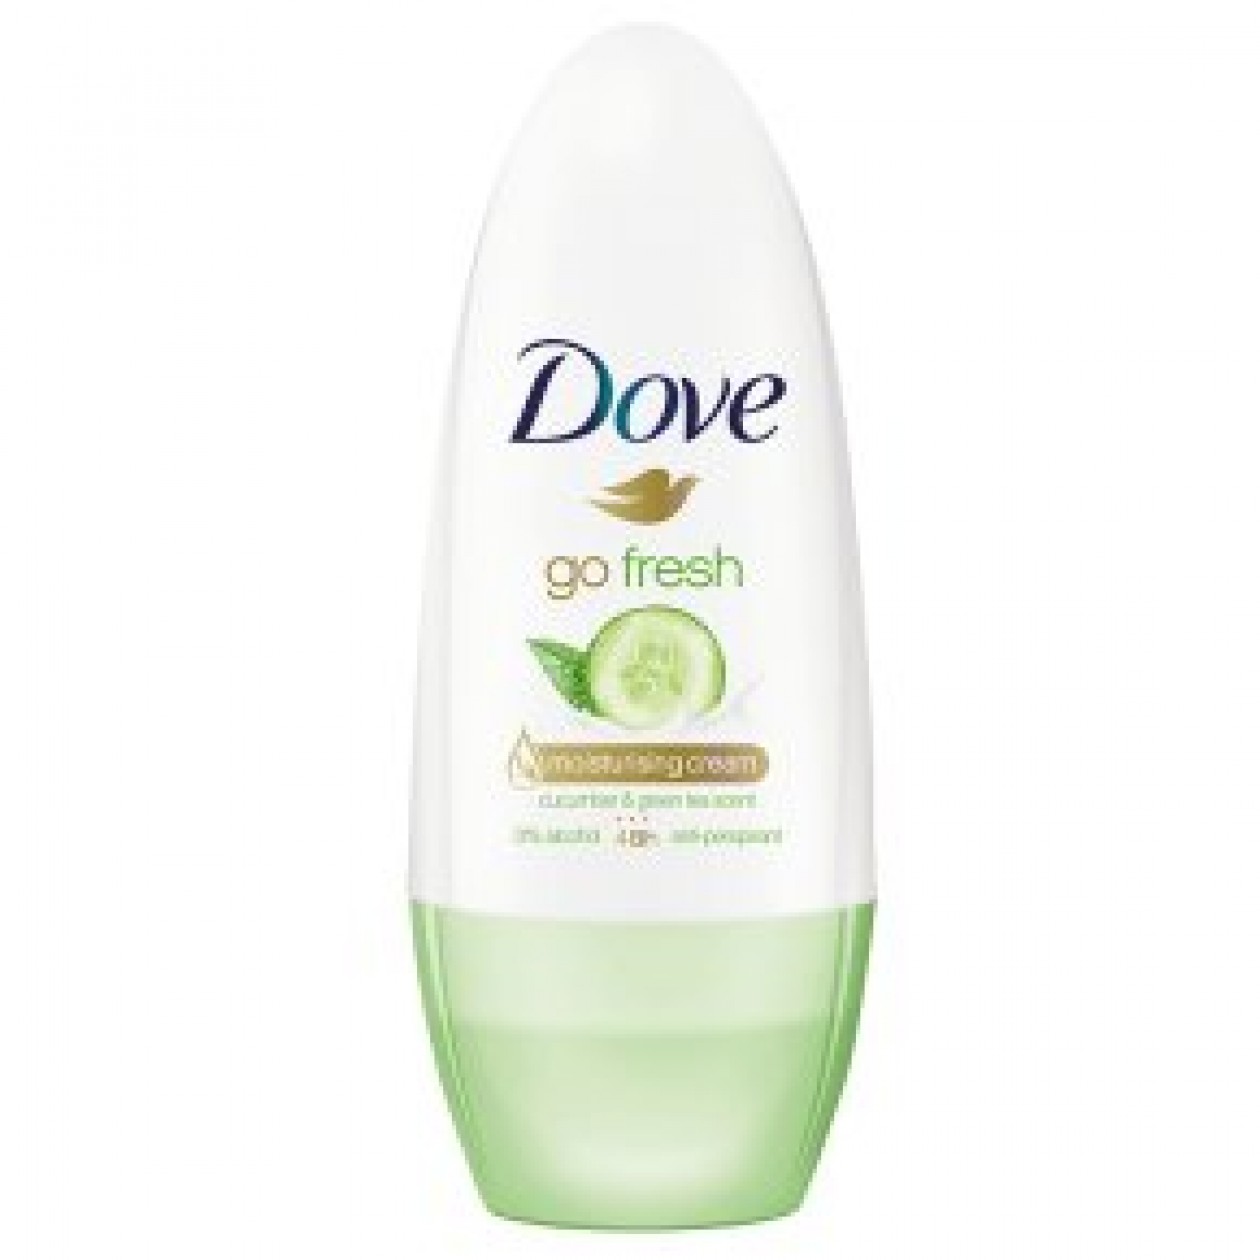 Dove Cucumber Roll-On Anti-Perspirant Deodorant 50ml